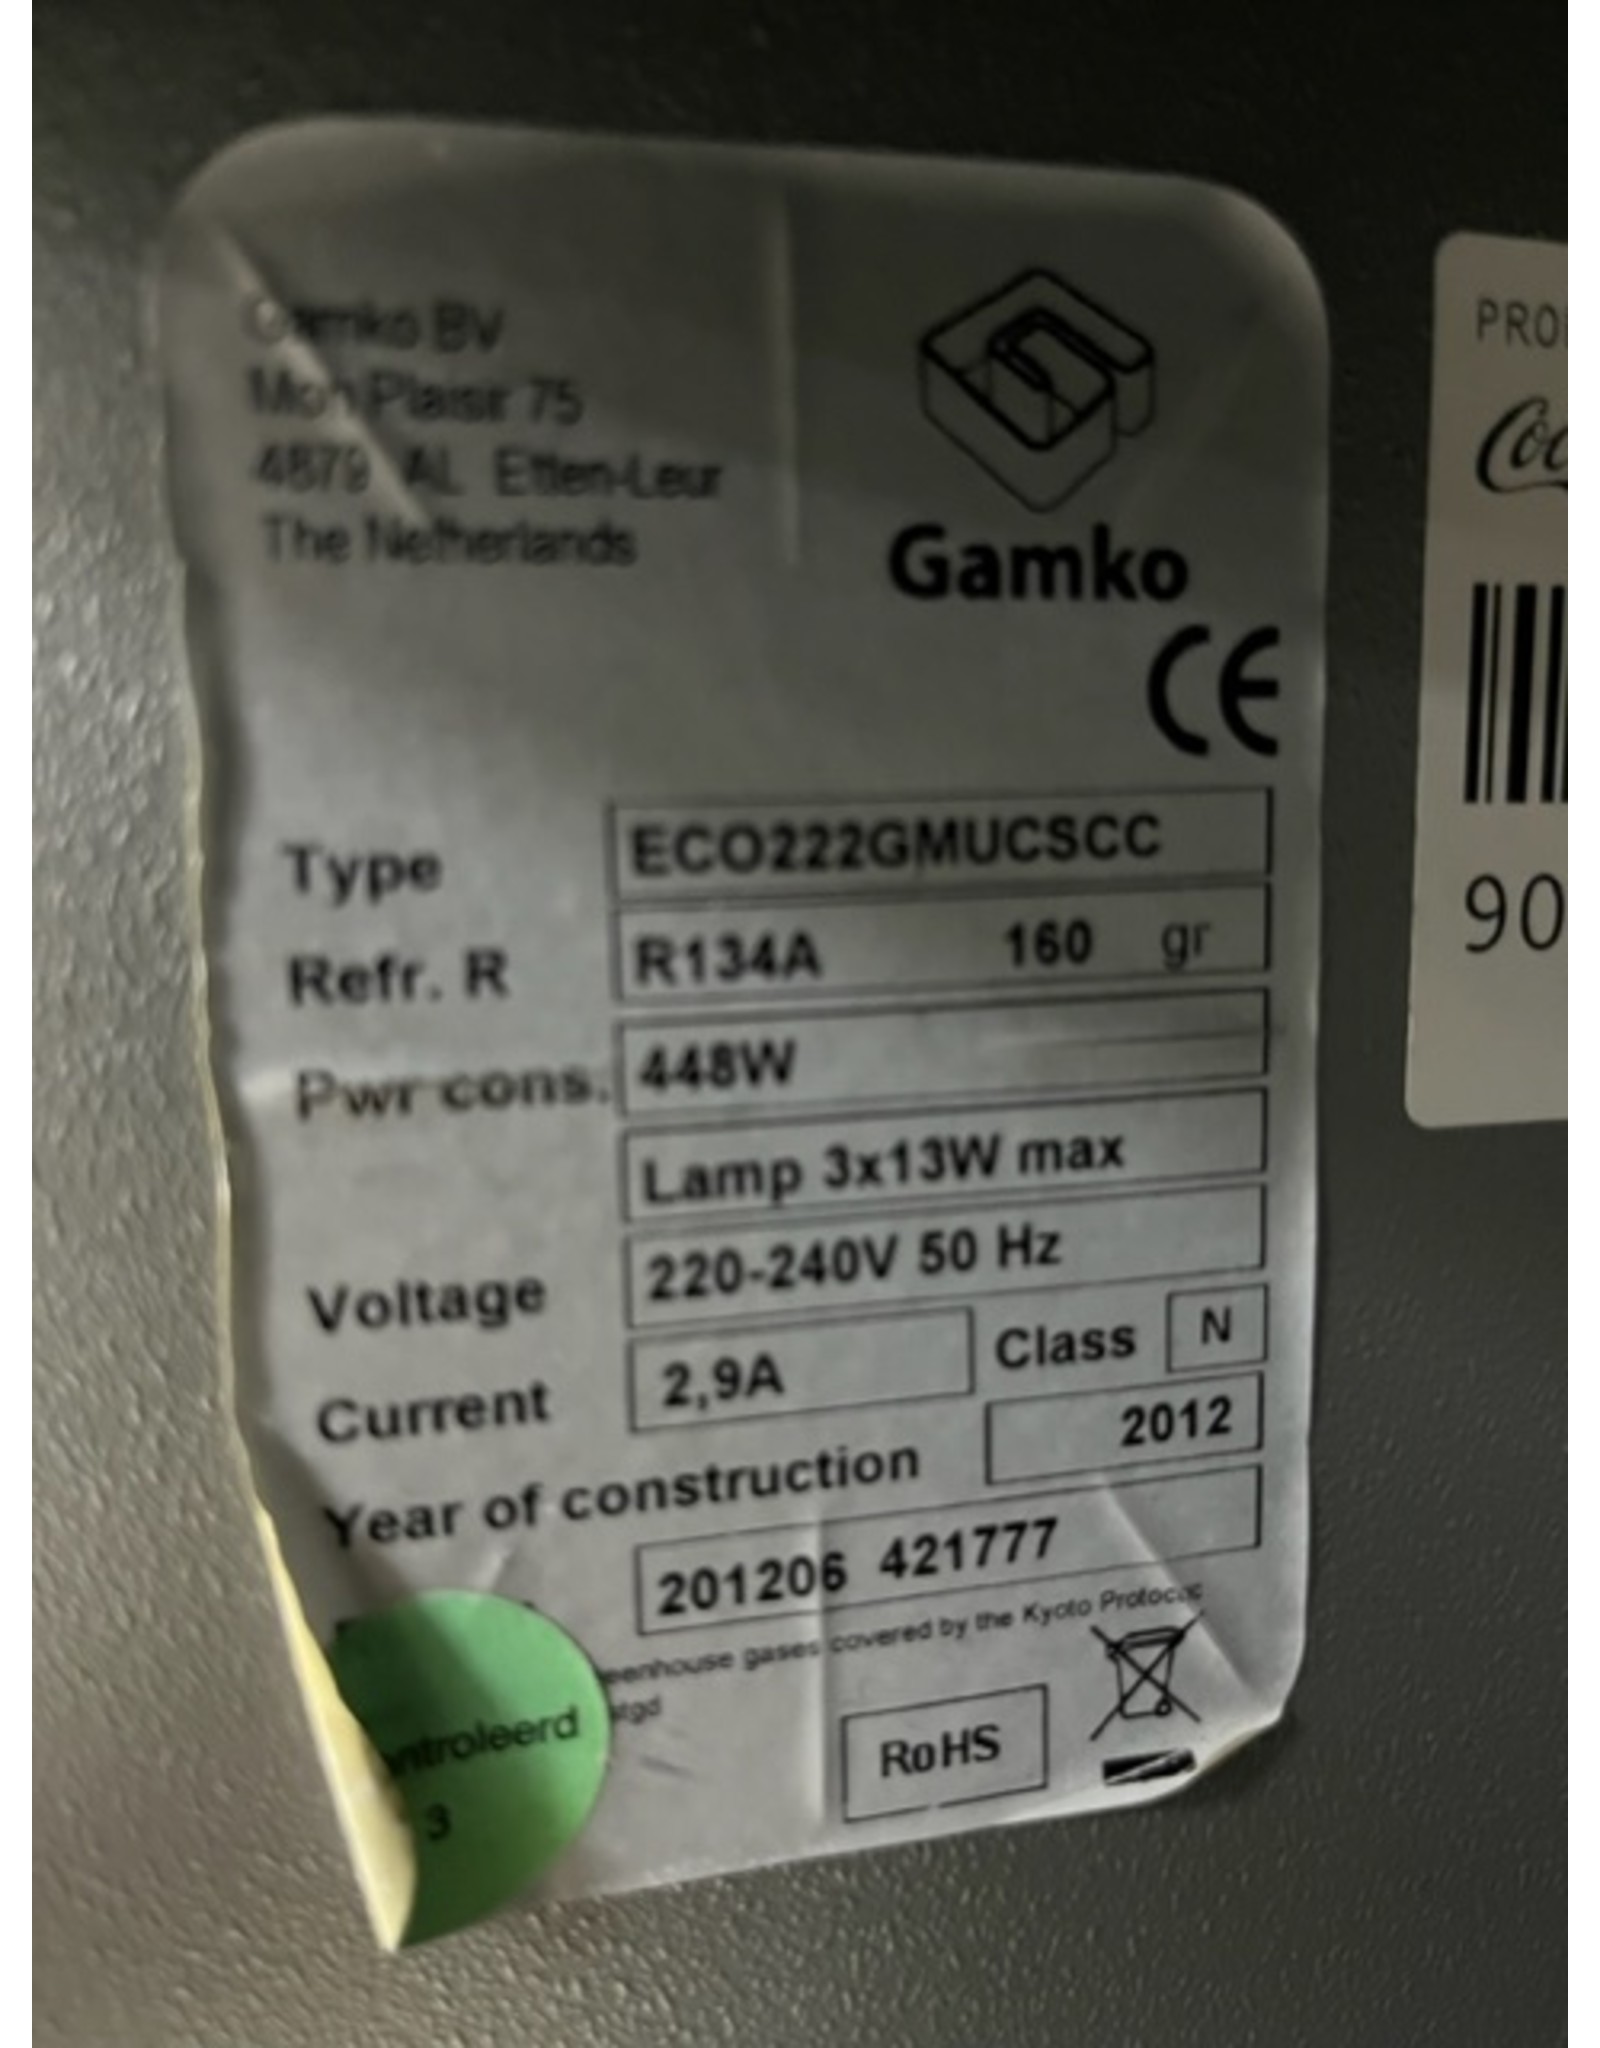 Gamko Gamko ECO222GMUCSCC 3 (Glas) Tür Bar Cooling (2012)